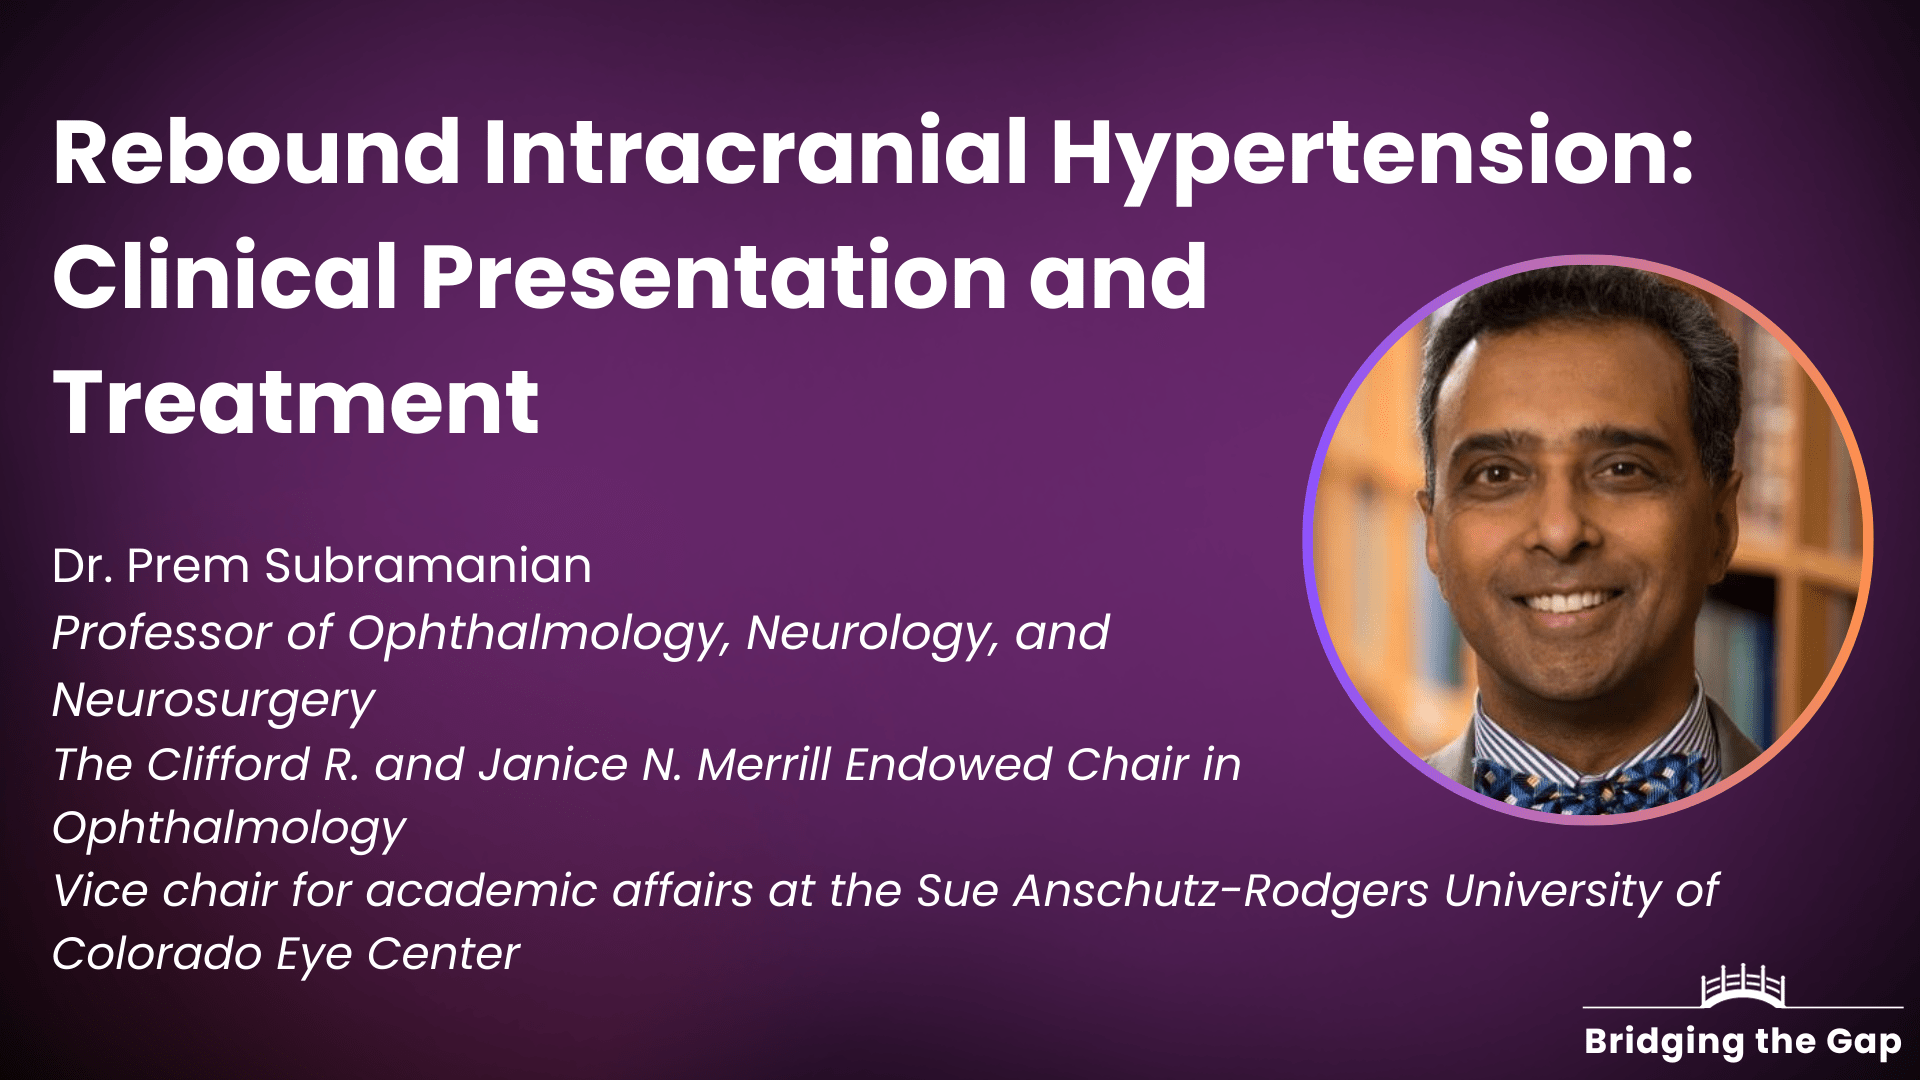 Dr. Prem Subramanian: Rebound Intracranial Hypertension